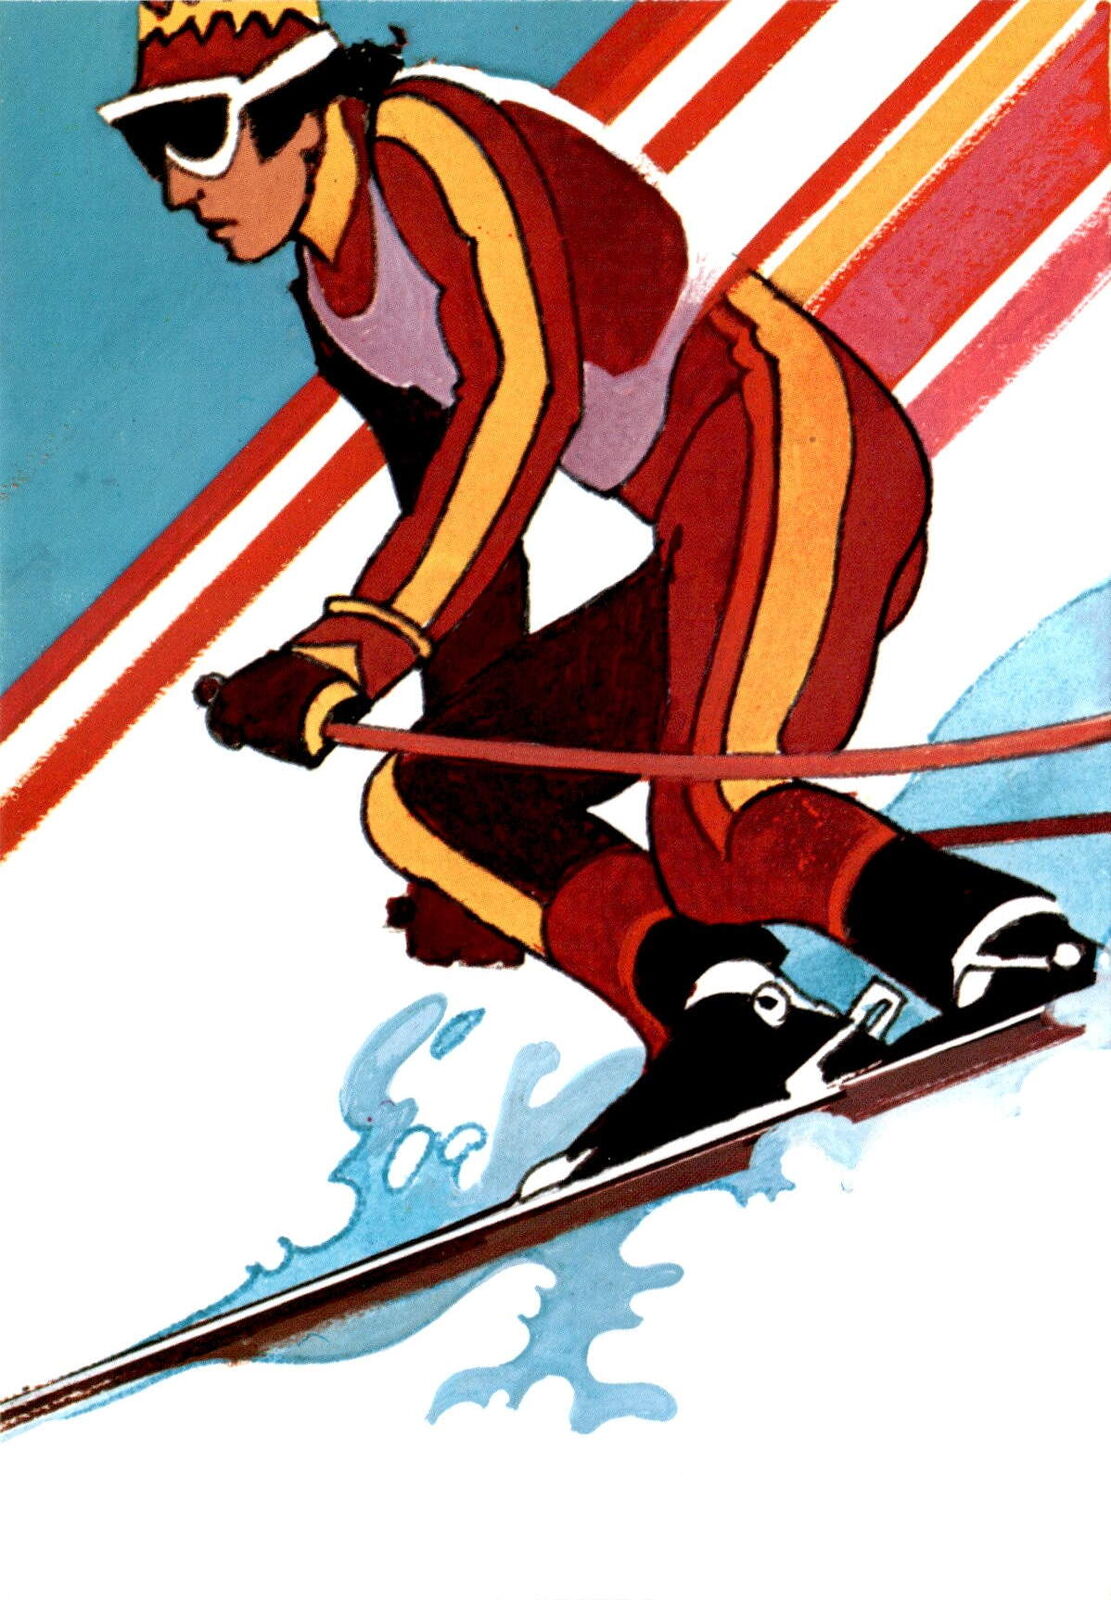 1984 Winter Olympics stamp featuring Alpine skiing.